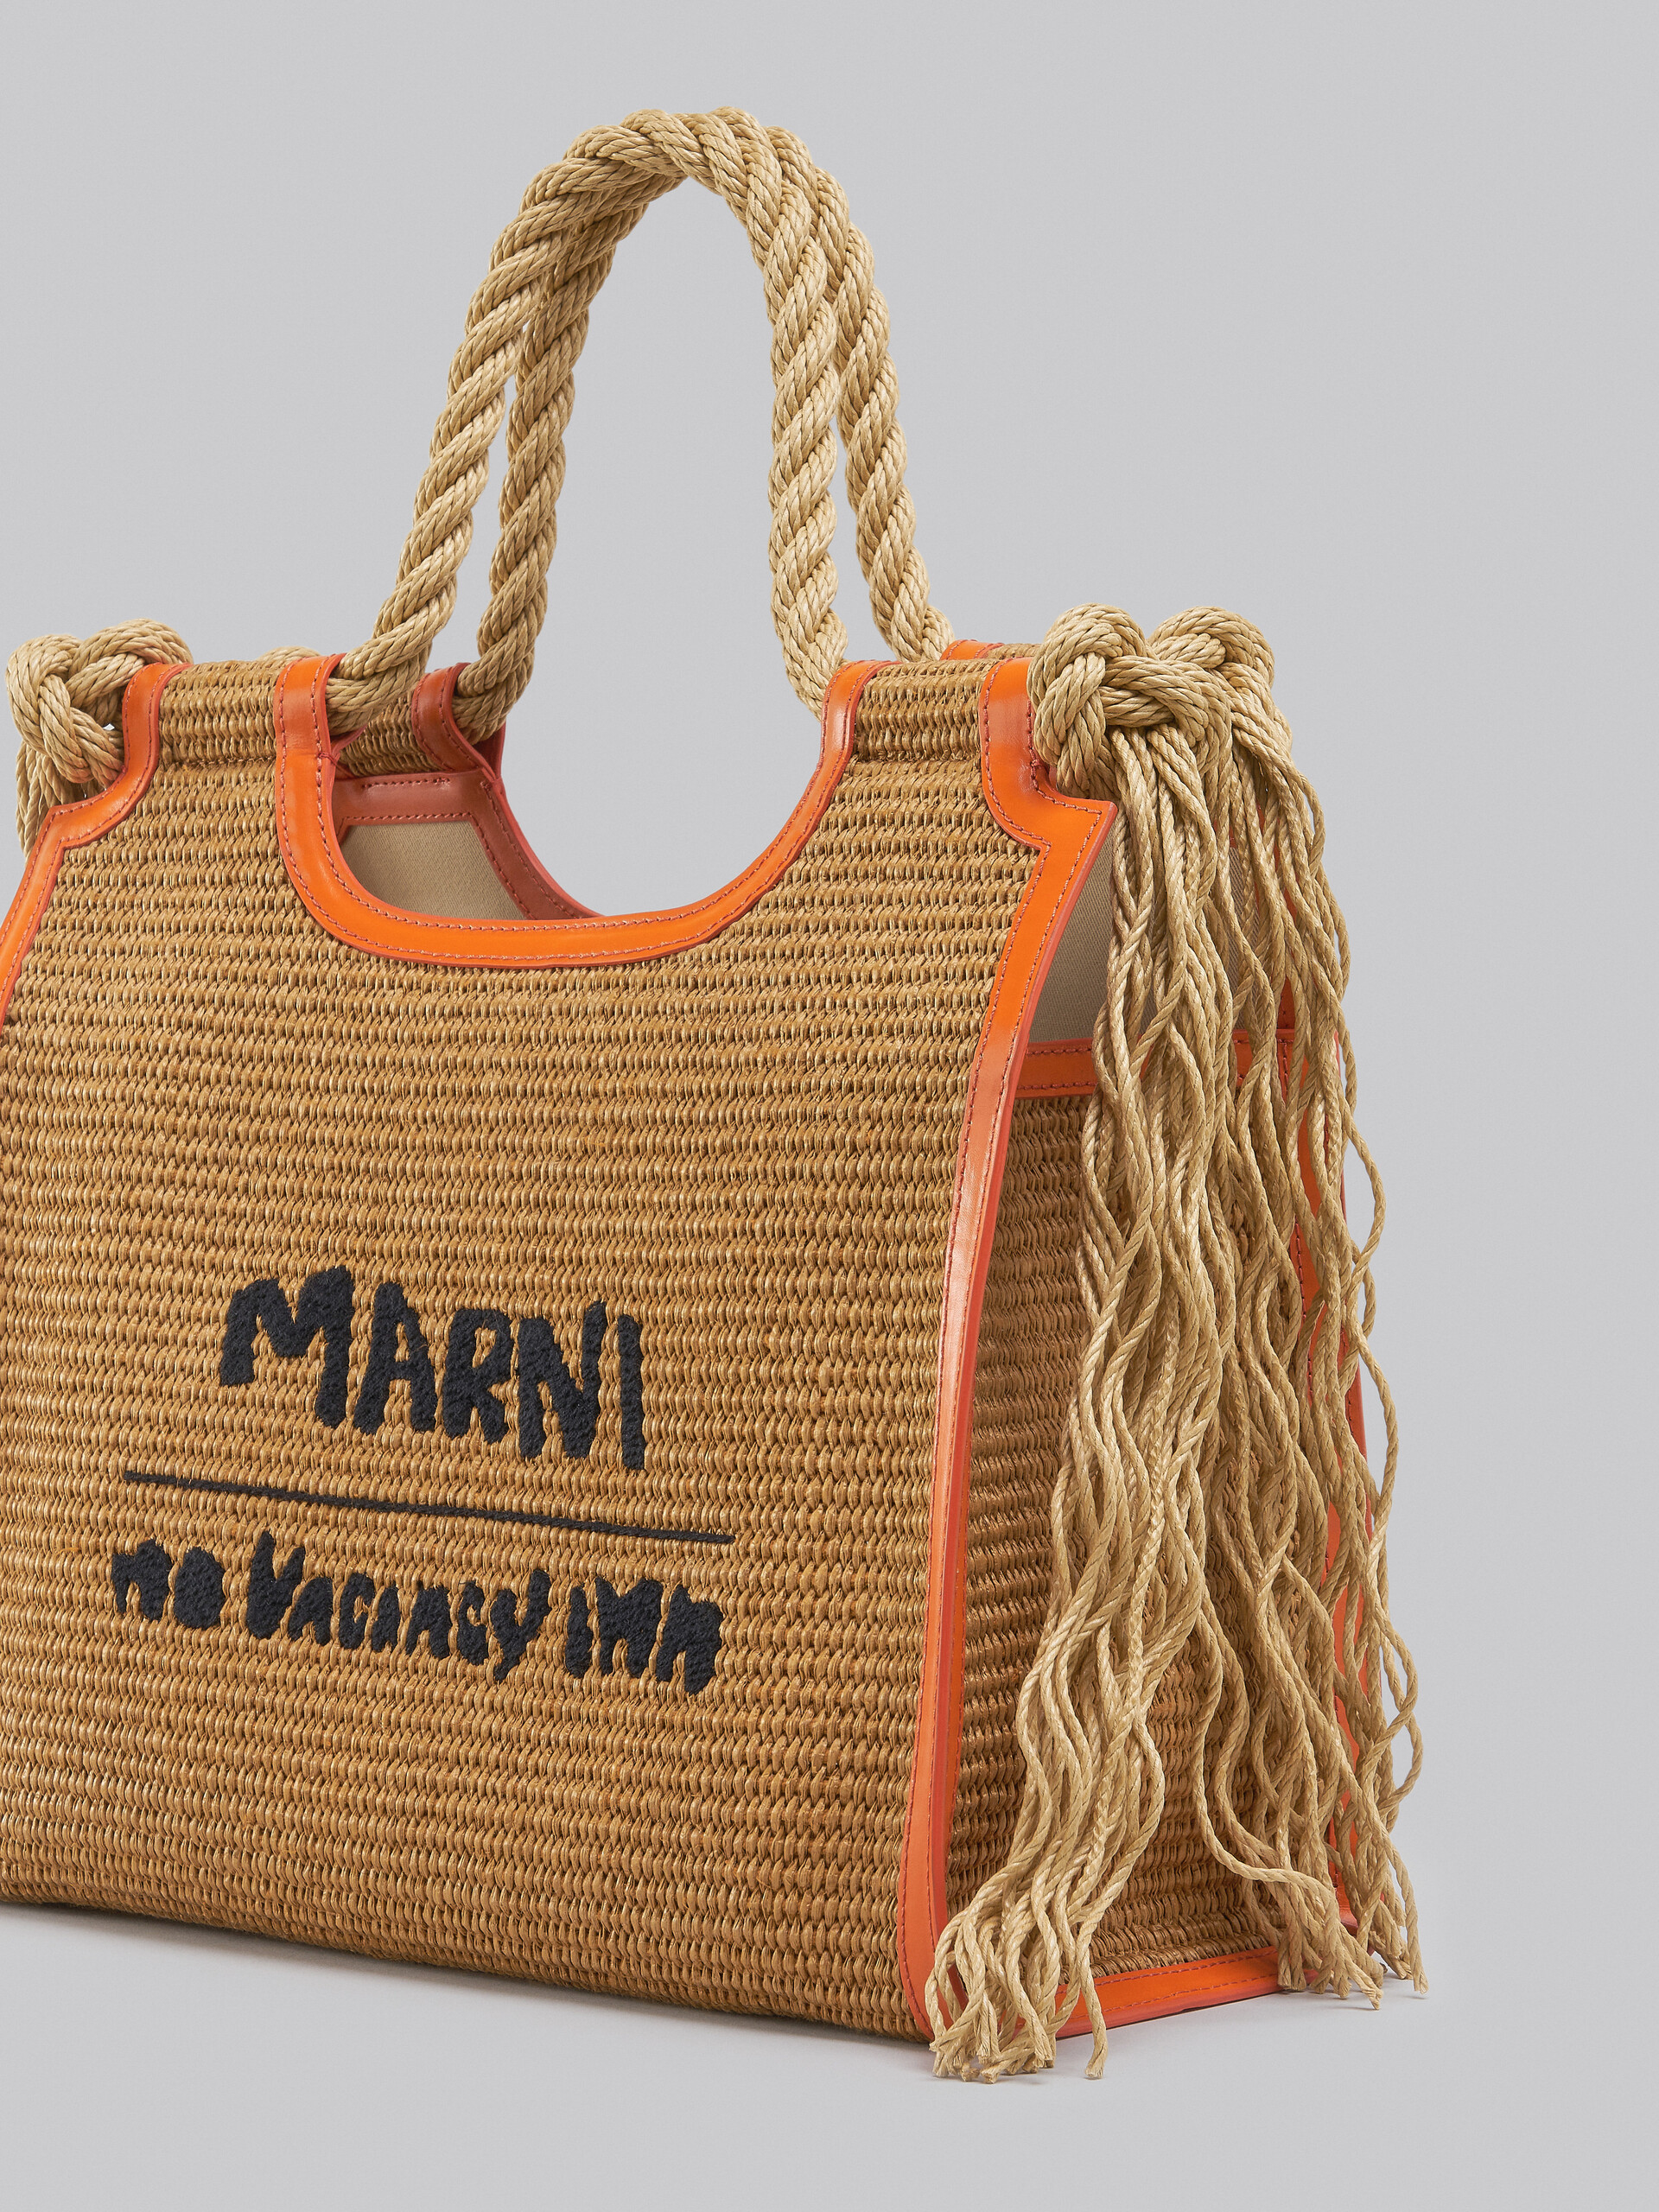 Marni x No Vacancy Inn - Marcel Tote Bag in raffia with orange trims - Handbag - Image 5